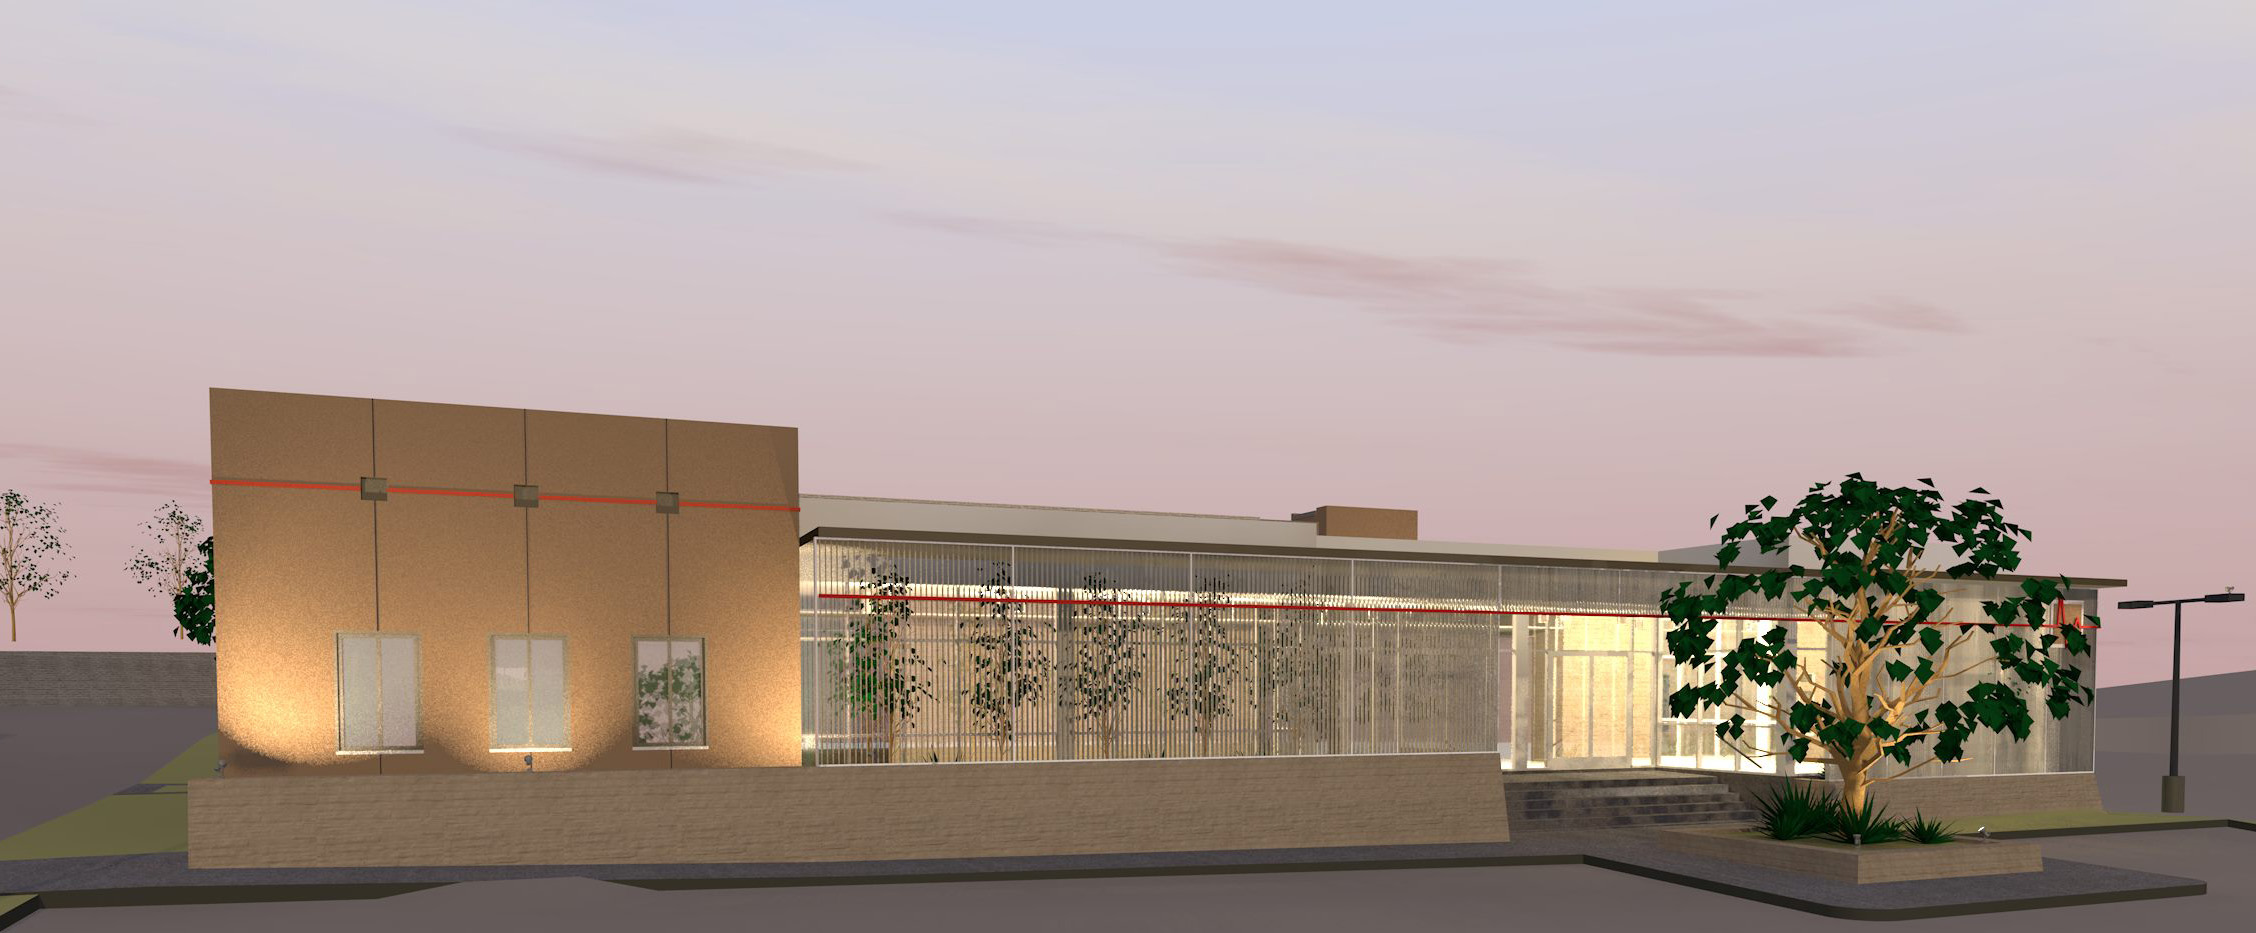 Las Virgenes Medical Center Addition & Remodel - ENR architects, Granbury, TX 76049 - W Elevation Dusk